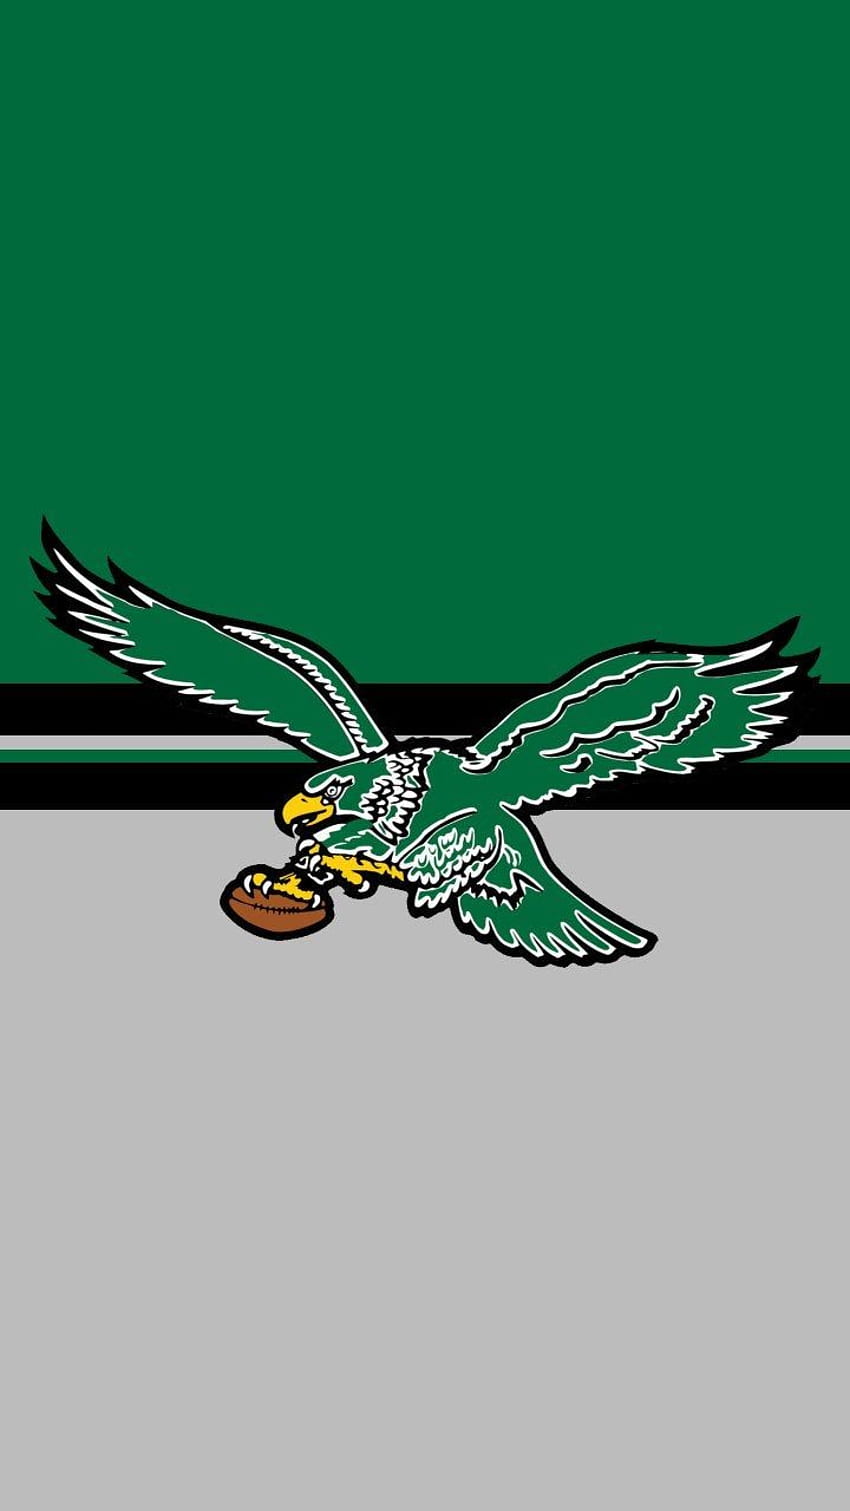 Philadelphia Eagles logo for Apple iPhone 6 wallpaper  Philadelphia eagles  wallpaper Philadelphia eagles logo Eagles football